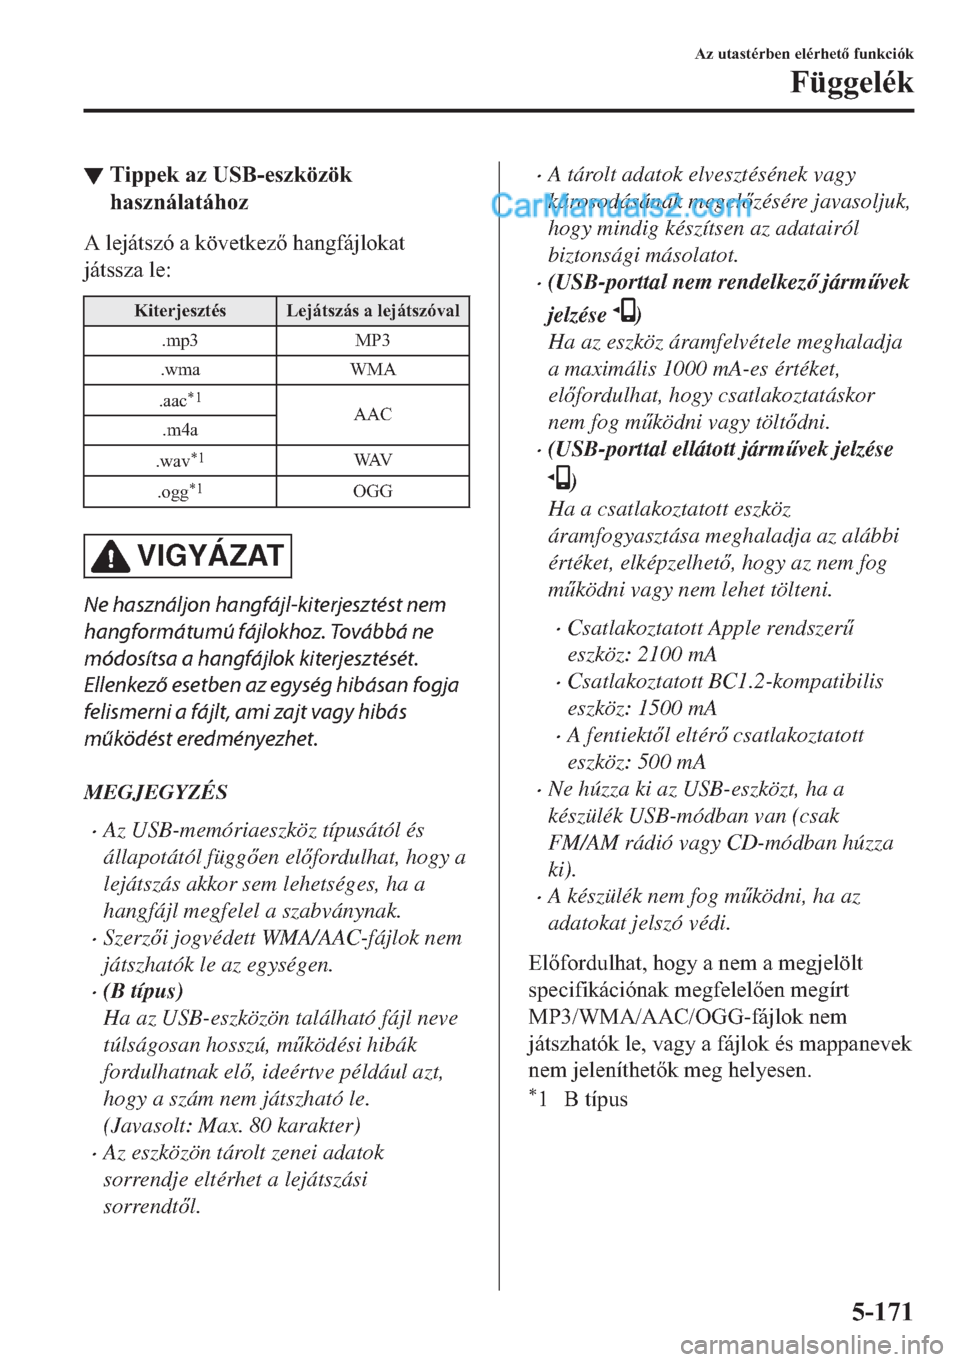 MAZDA MODEL 2 2019  Kezelési útmutató (in Hungarian) ▼�7�L�S�S�H�N��D�]��8�6�%��H�V�]�N�|�]�|�N
�K�D�V�]�Q�i�O�D�W�i�K�R�]
�$��O�H�M�i�W�V�]�y��D��N�|�Y�H�W�N�H�]��K�D�Q�J�I�i�M�O�R�N�D�W
�M�i�W�V�V�]�D��O�H�
�.�L�W�H�U�M�H�V�]�W�p�V �/�H�M